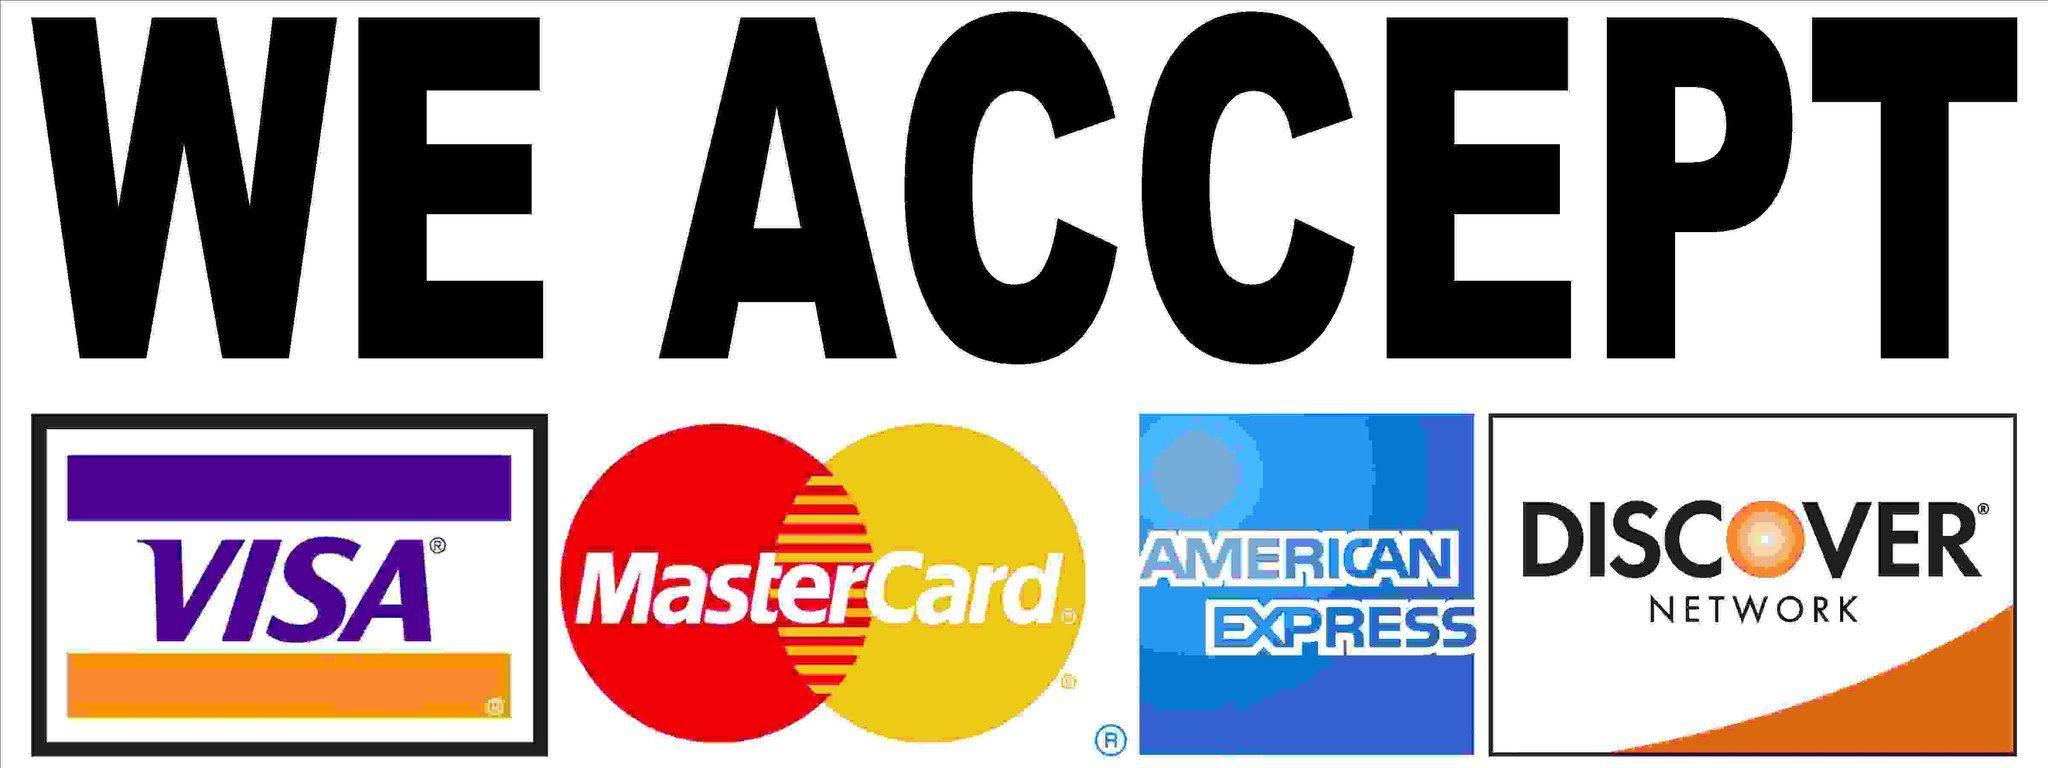 American Express Visa MasterCard Logo - We Accept Visa Mastercard American Express Discover Card Sign